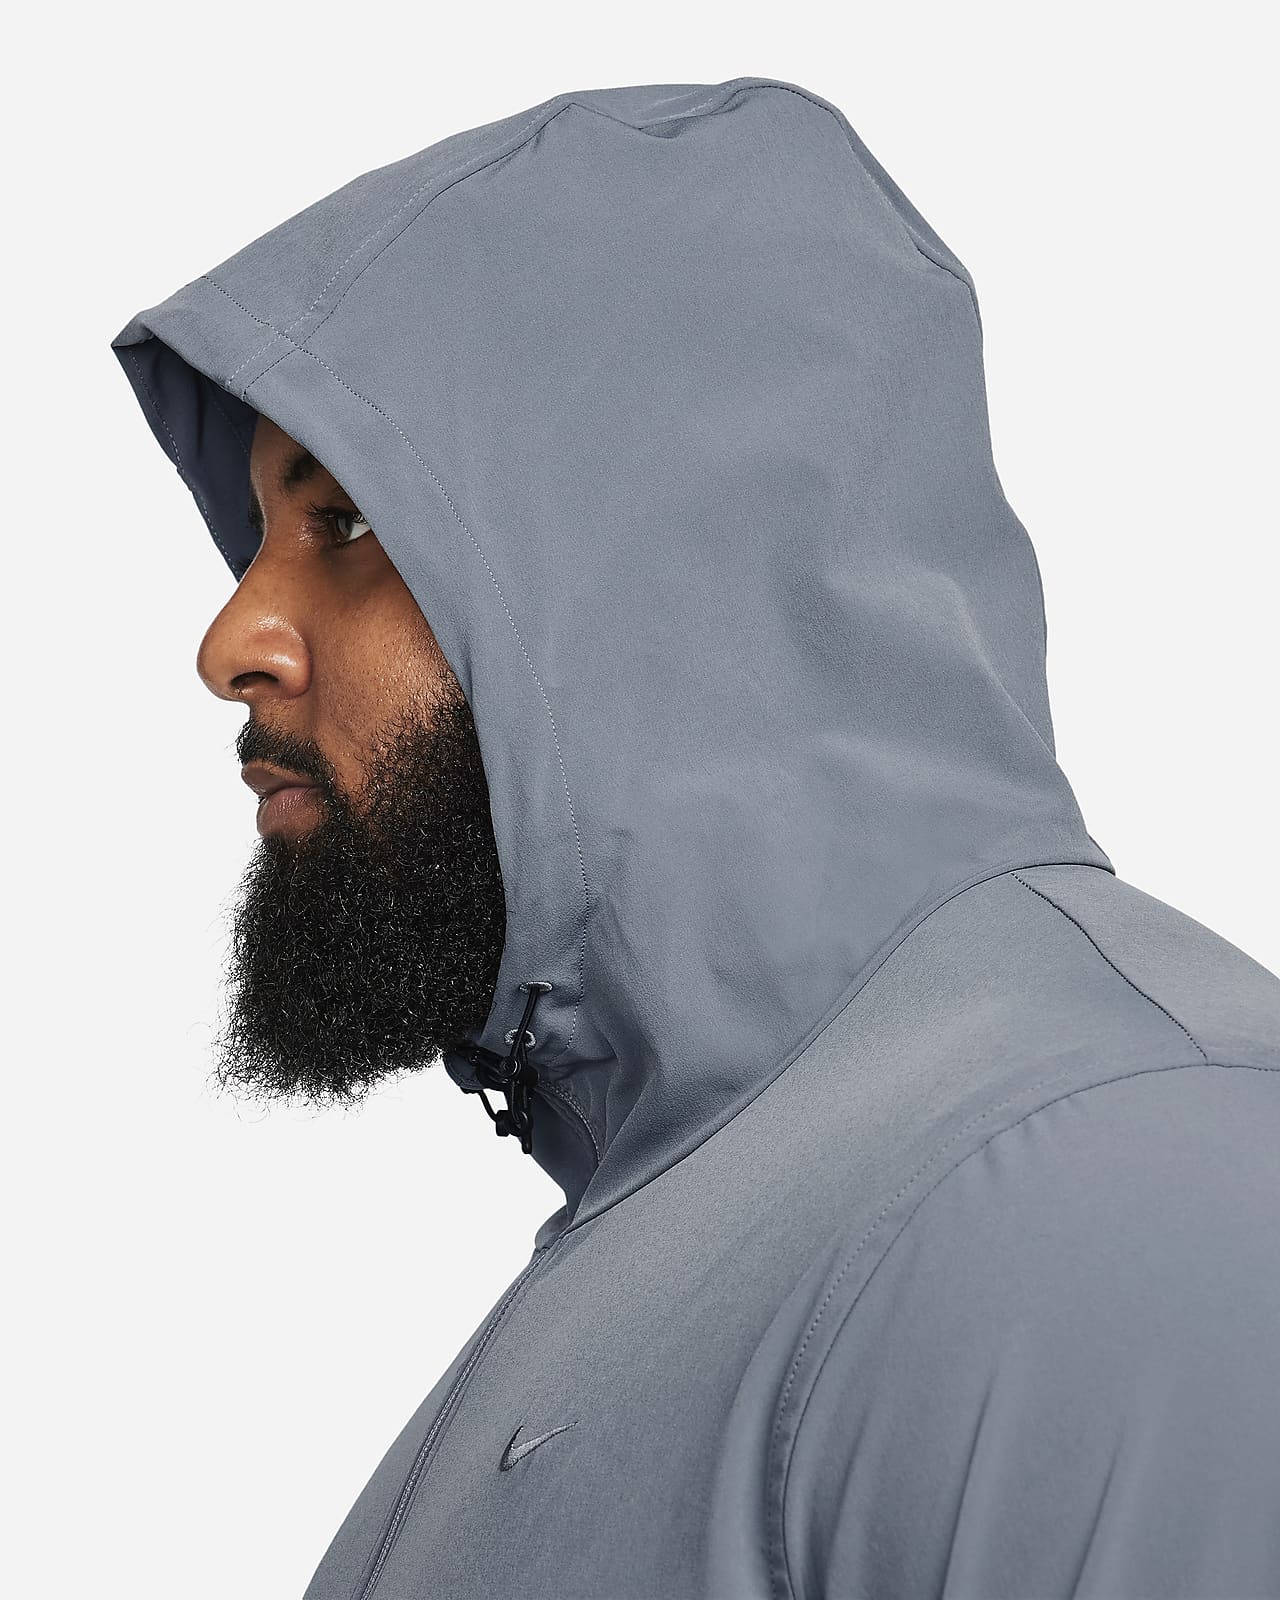 Nike Unlimited Men's Water-Repellent Hooded Versatile Jacket.